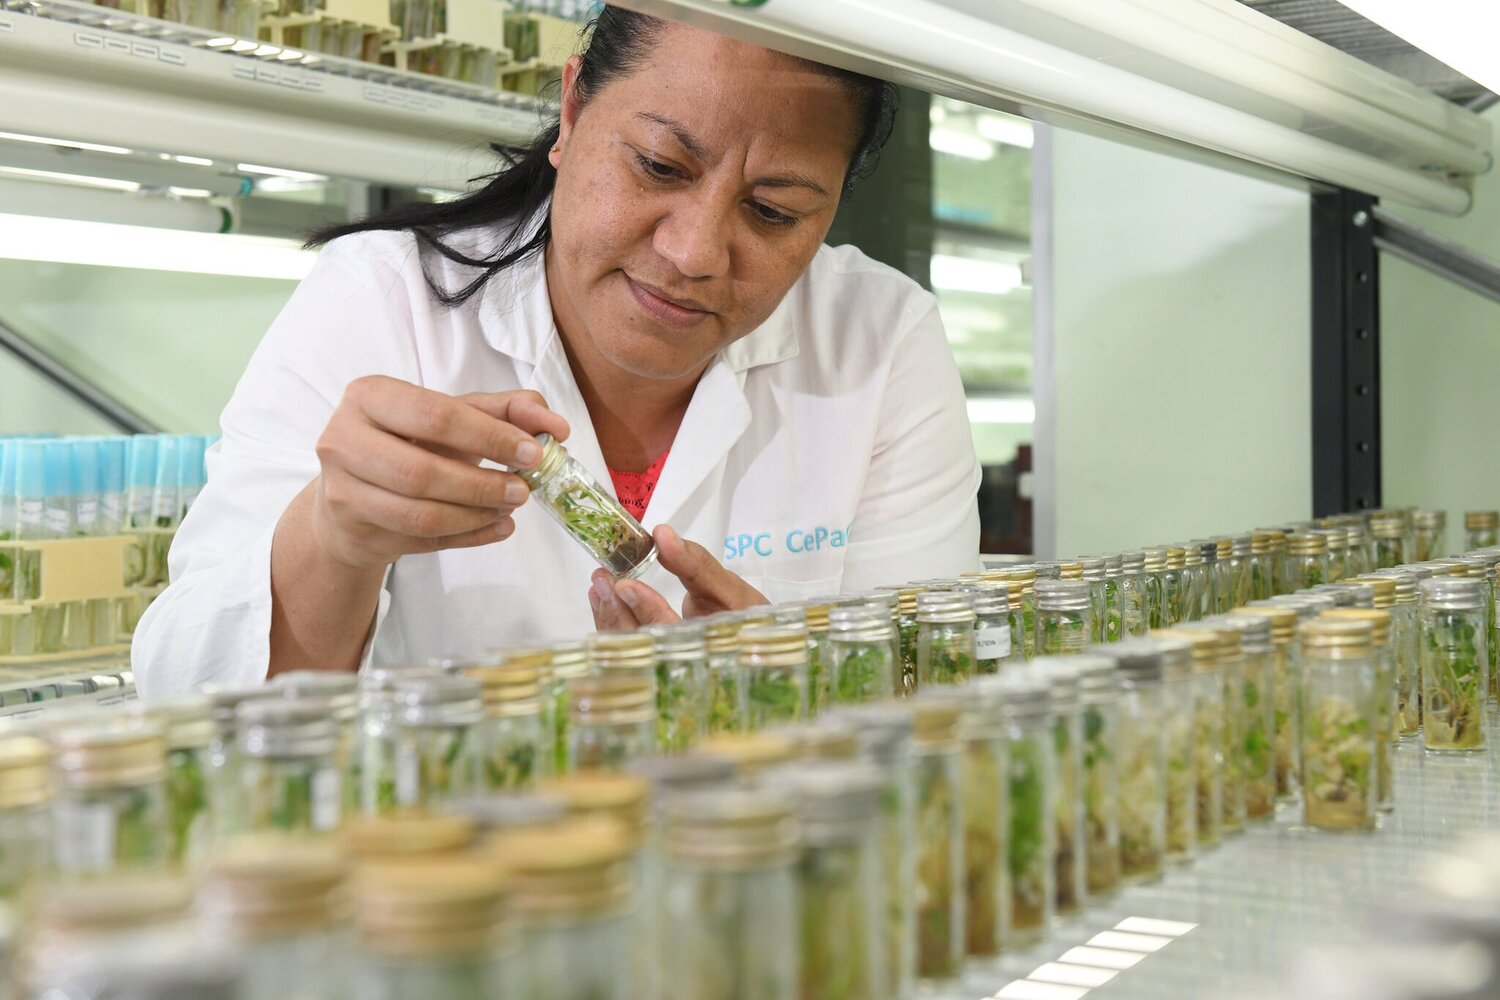 Genebank scientist examining plantlets in vial